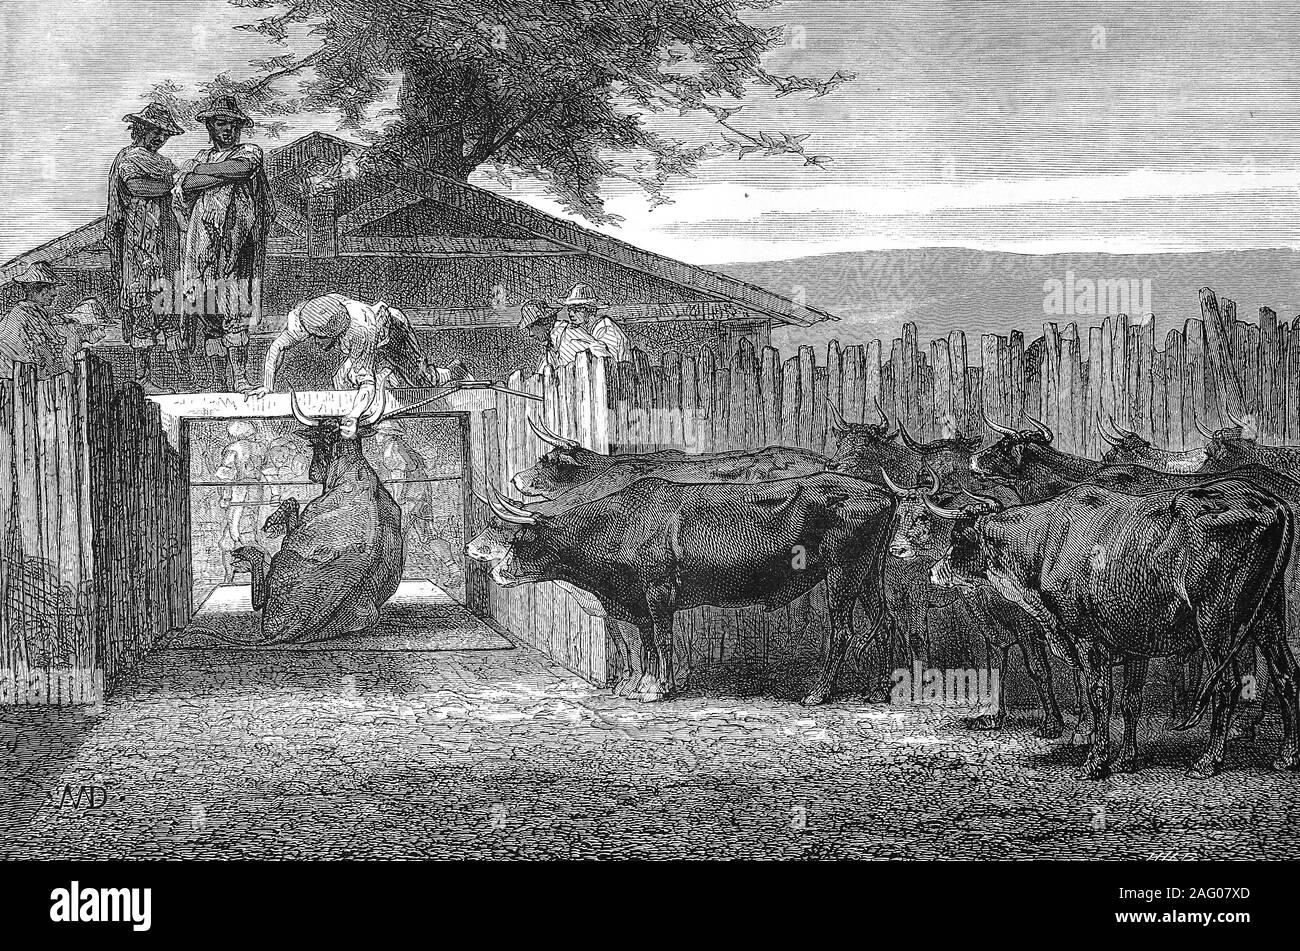 Slaughter of cattle, Paraguay  /  Schlachtung von Rindern, Paraguay, Reproduction of an original print from the 19th century, digital improved / Reproduktion einer Vorlage aus dem 19. Jahrhundert, digital verbessert Stock Photo